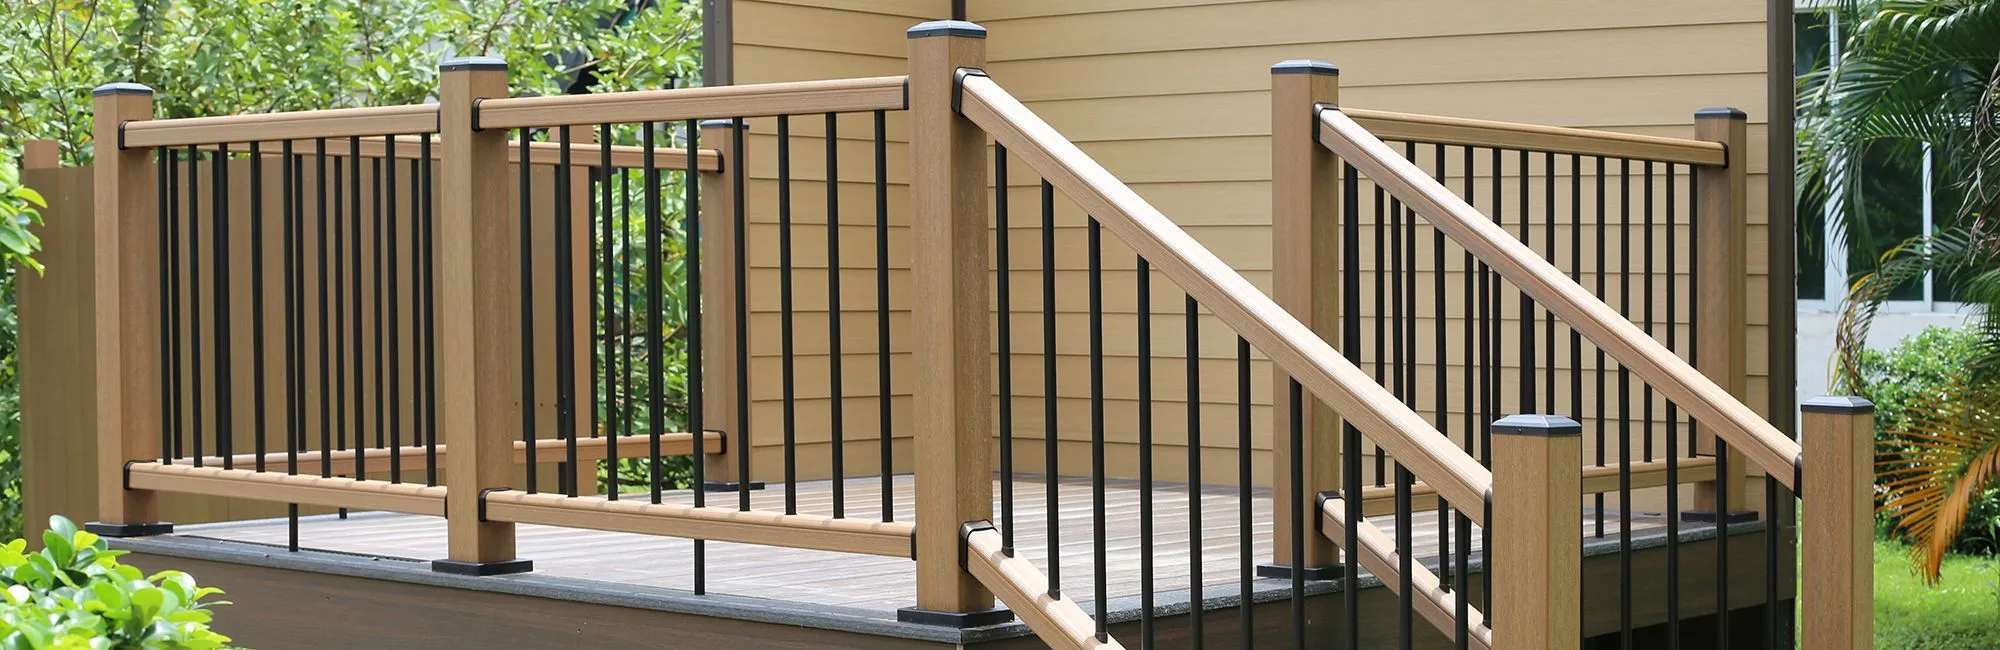 Composite Deck Railing Outdoor, Wooden Porch Railing Posts